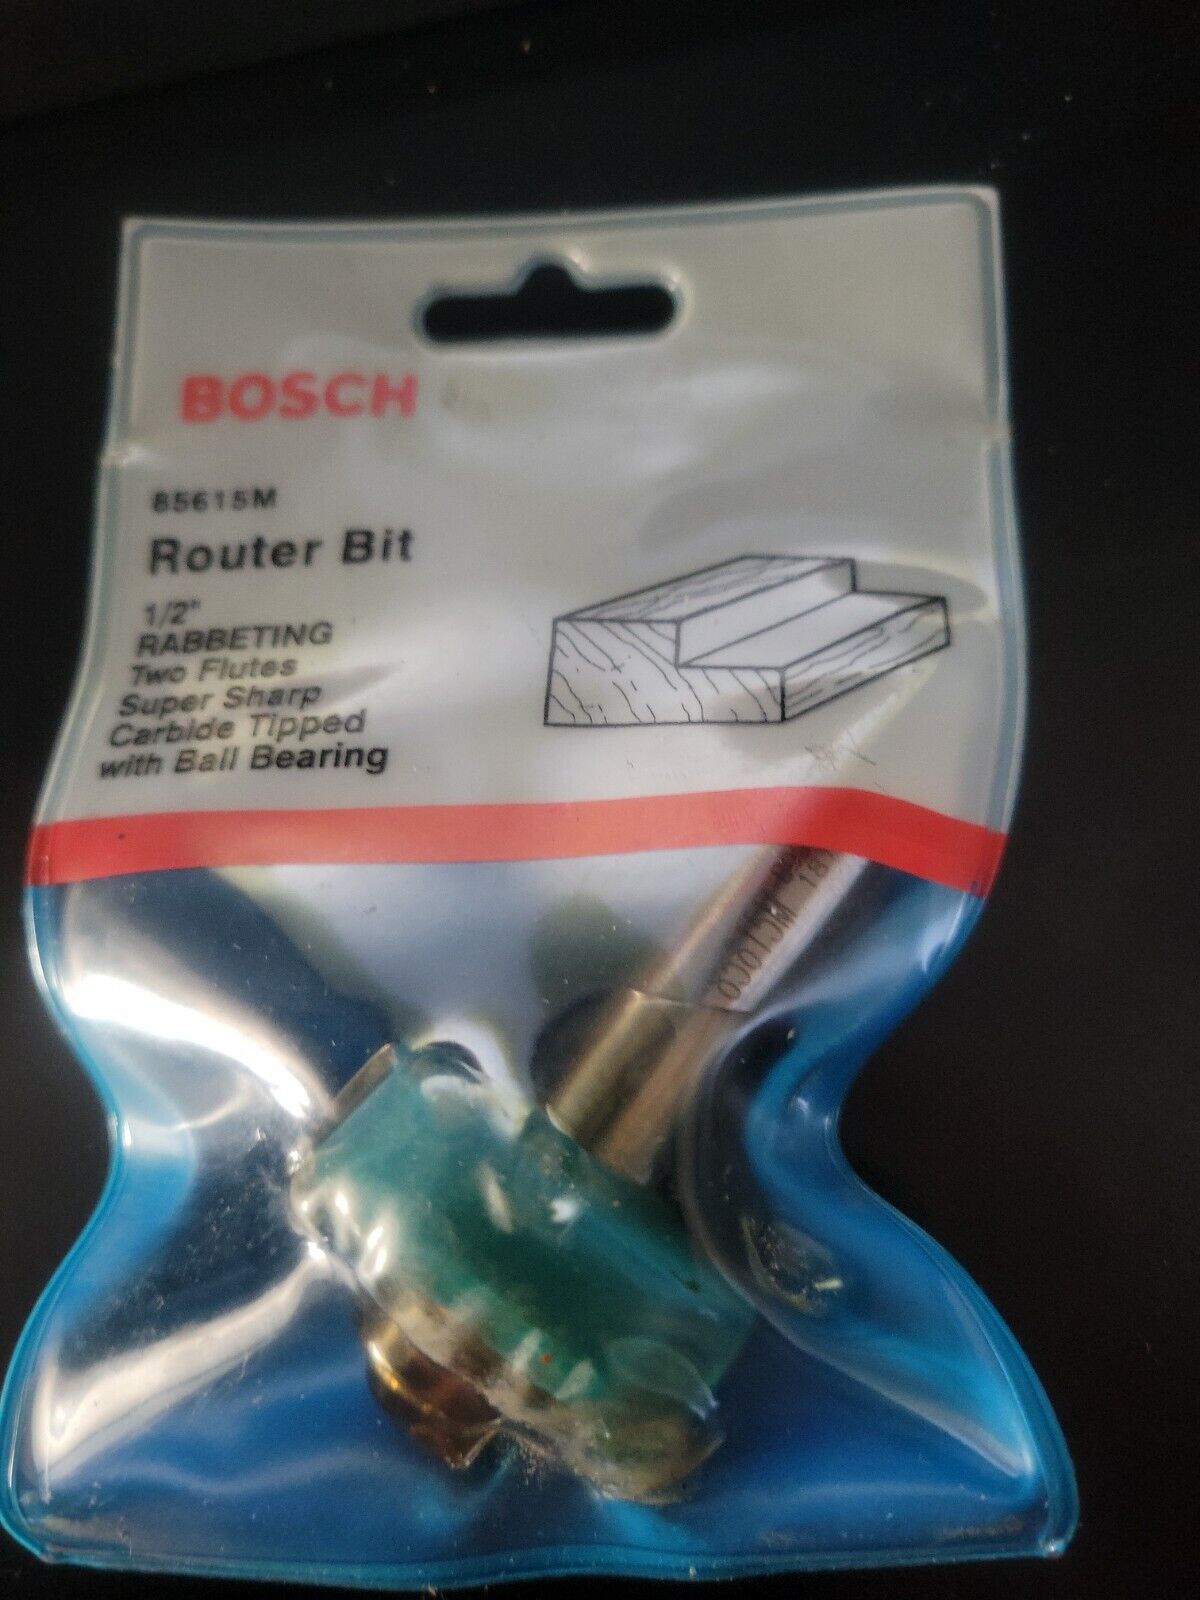 Bosch 85615M 1/2" x 1/2" Carbide Tipped Rabbeting Router Bit USA